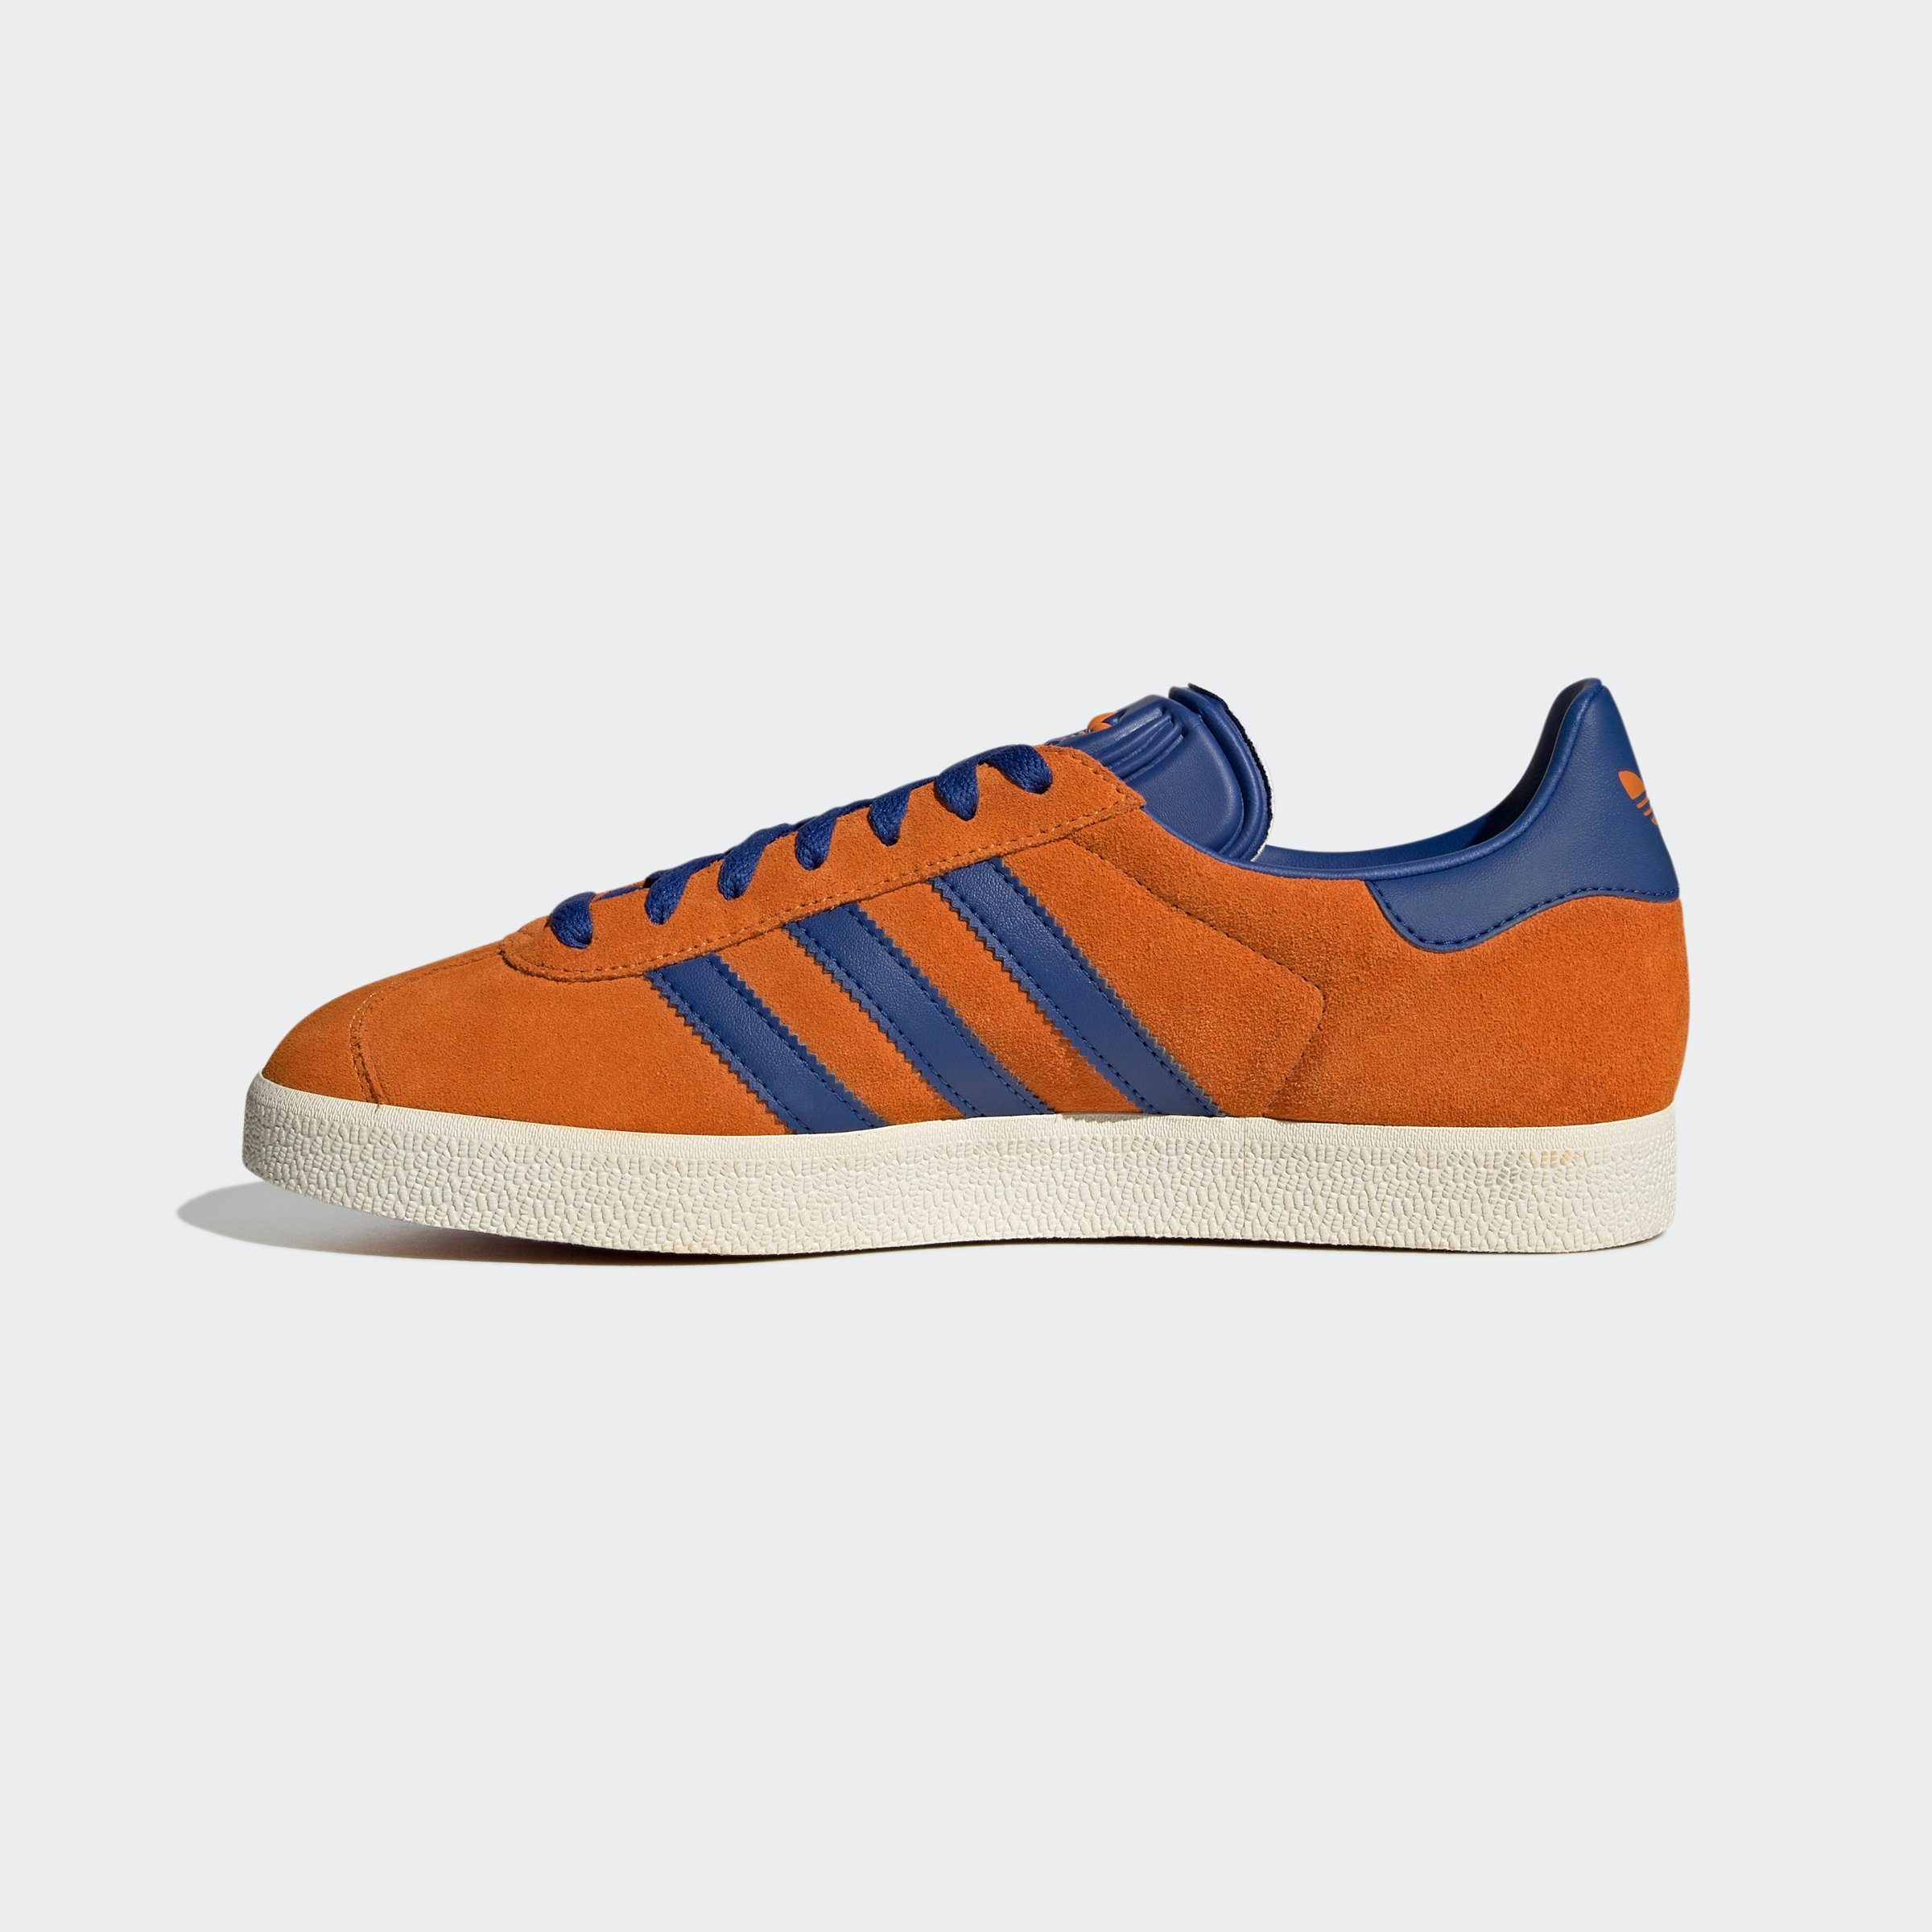 / GAZELLE Chalk White Blue Royal Bright adidas Sneaker Originals / Orange